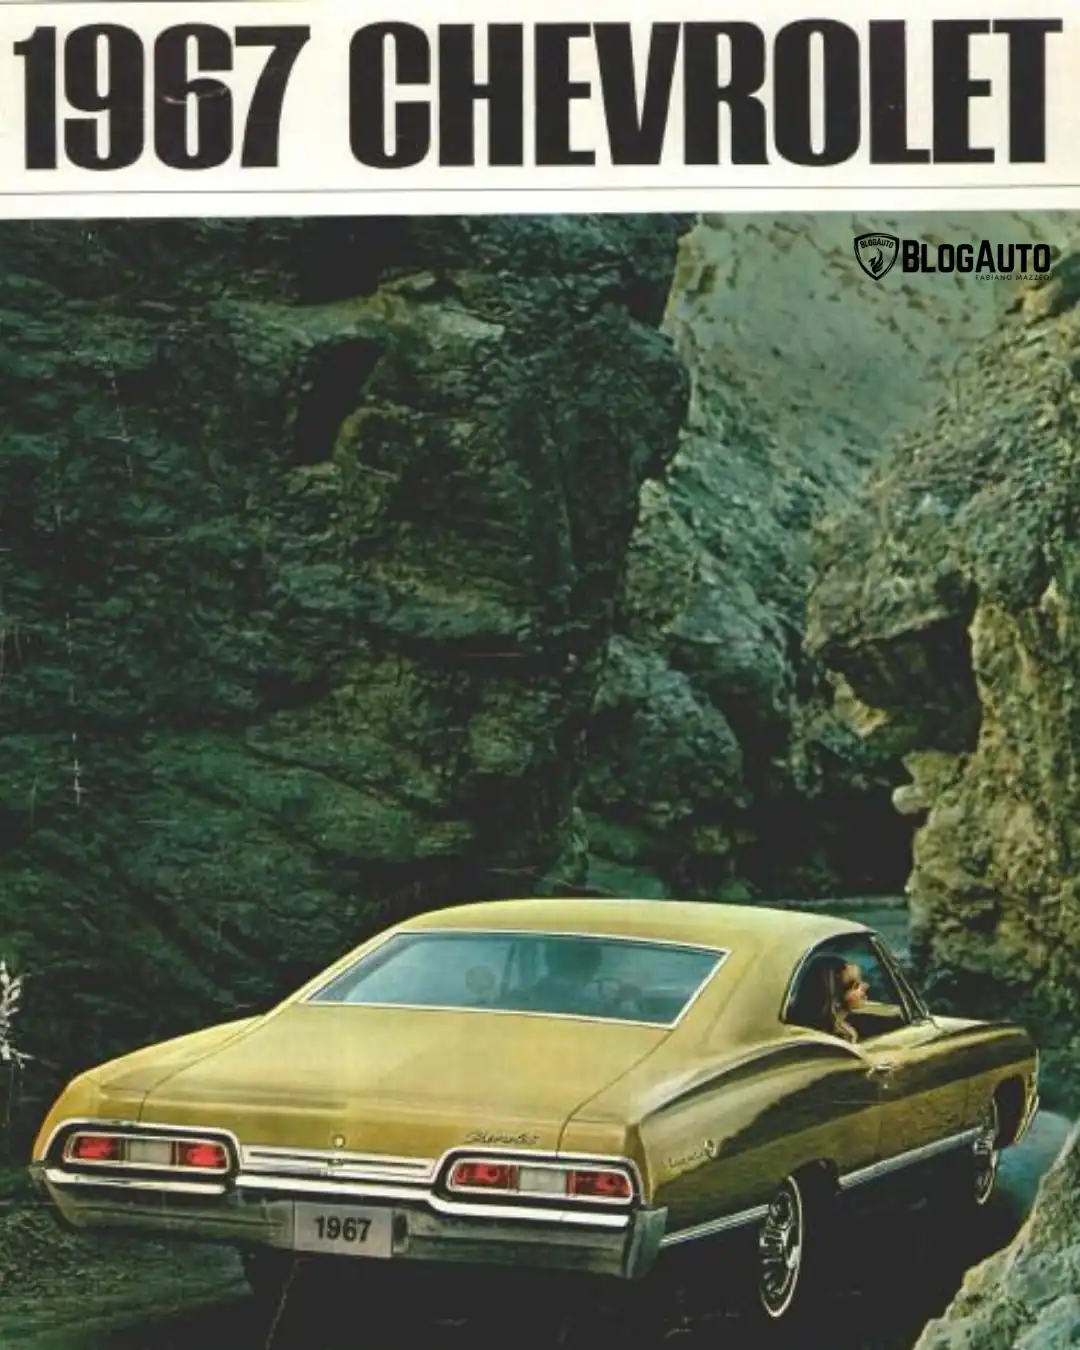 Chevrolet 67